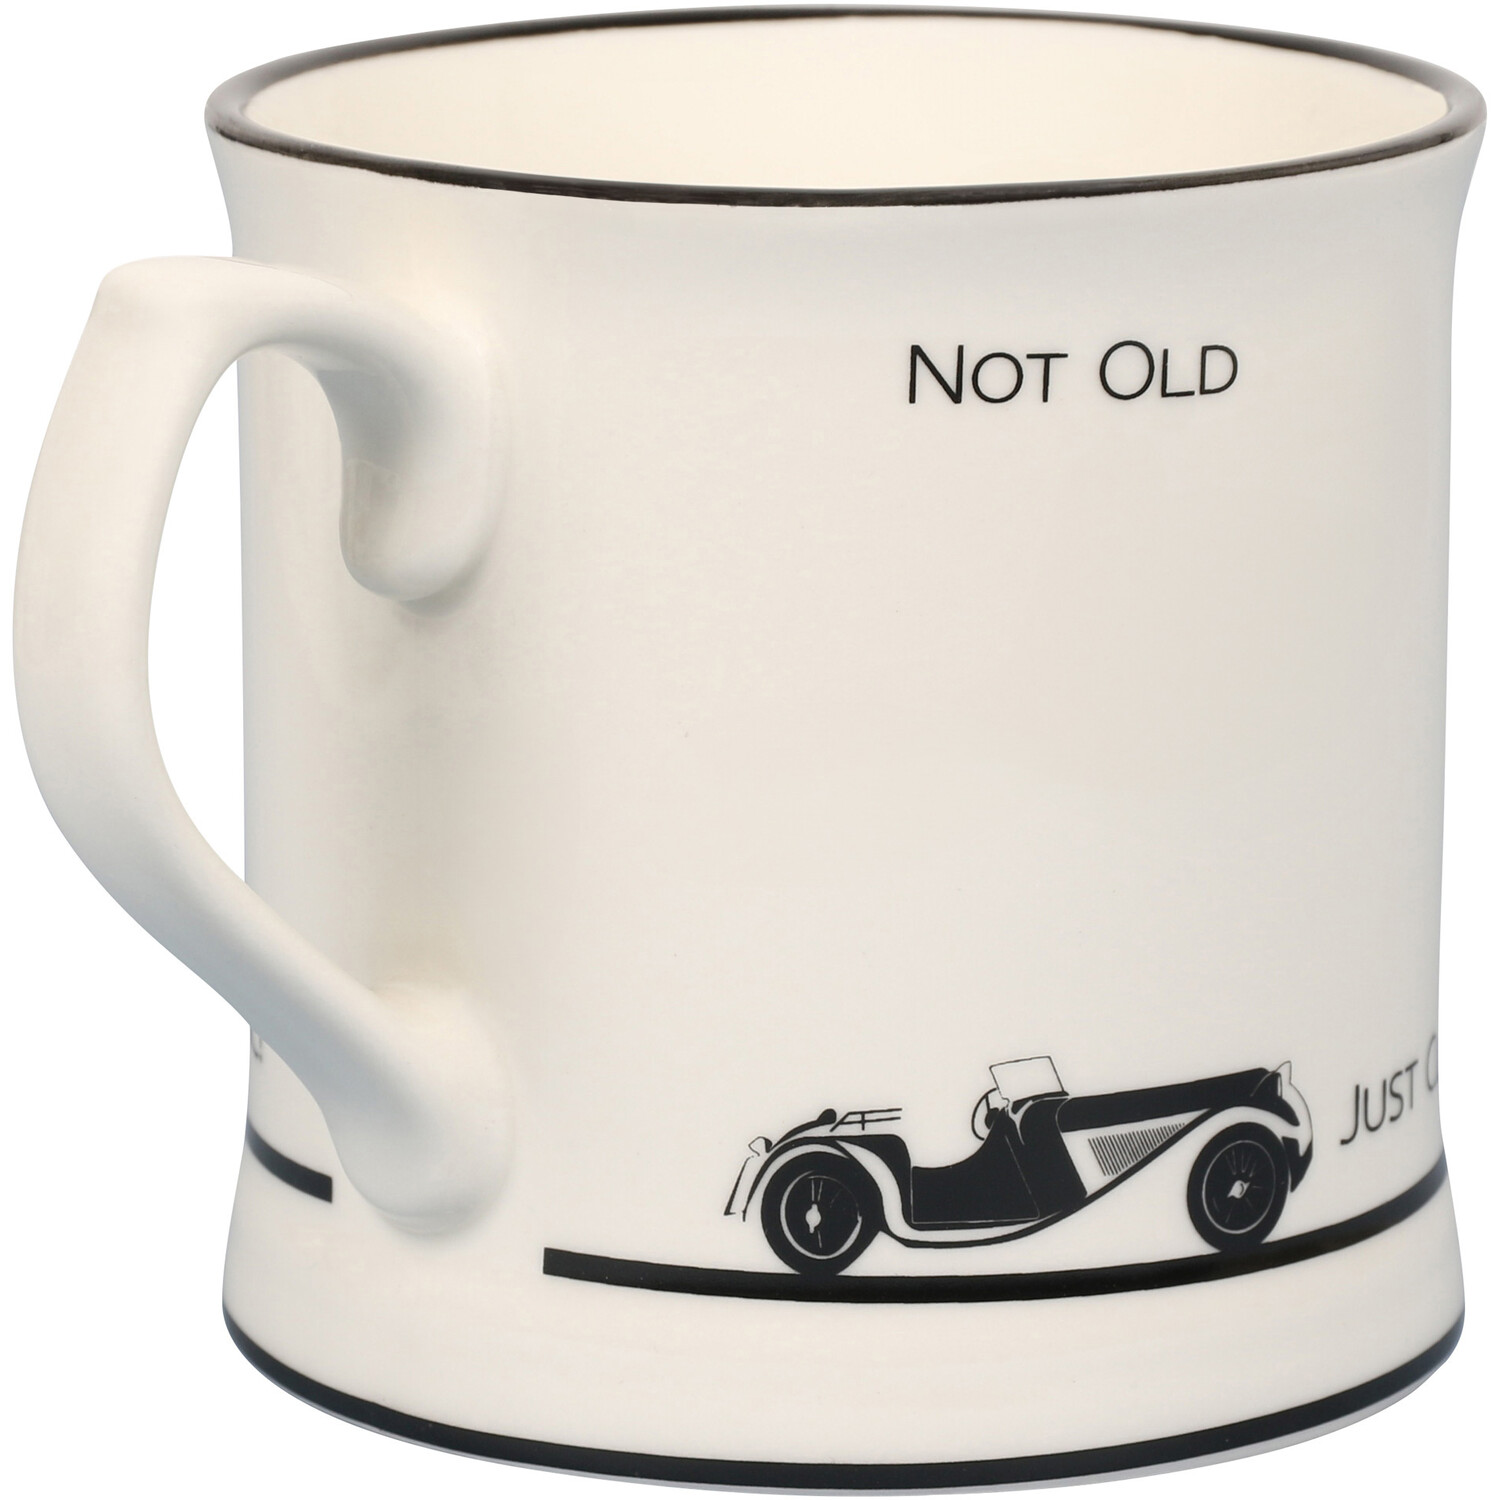 Not Old Just Classic Tankard Mug - White Image 2